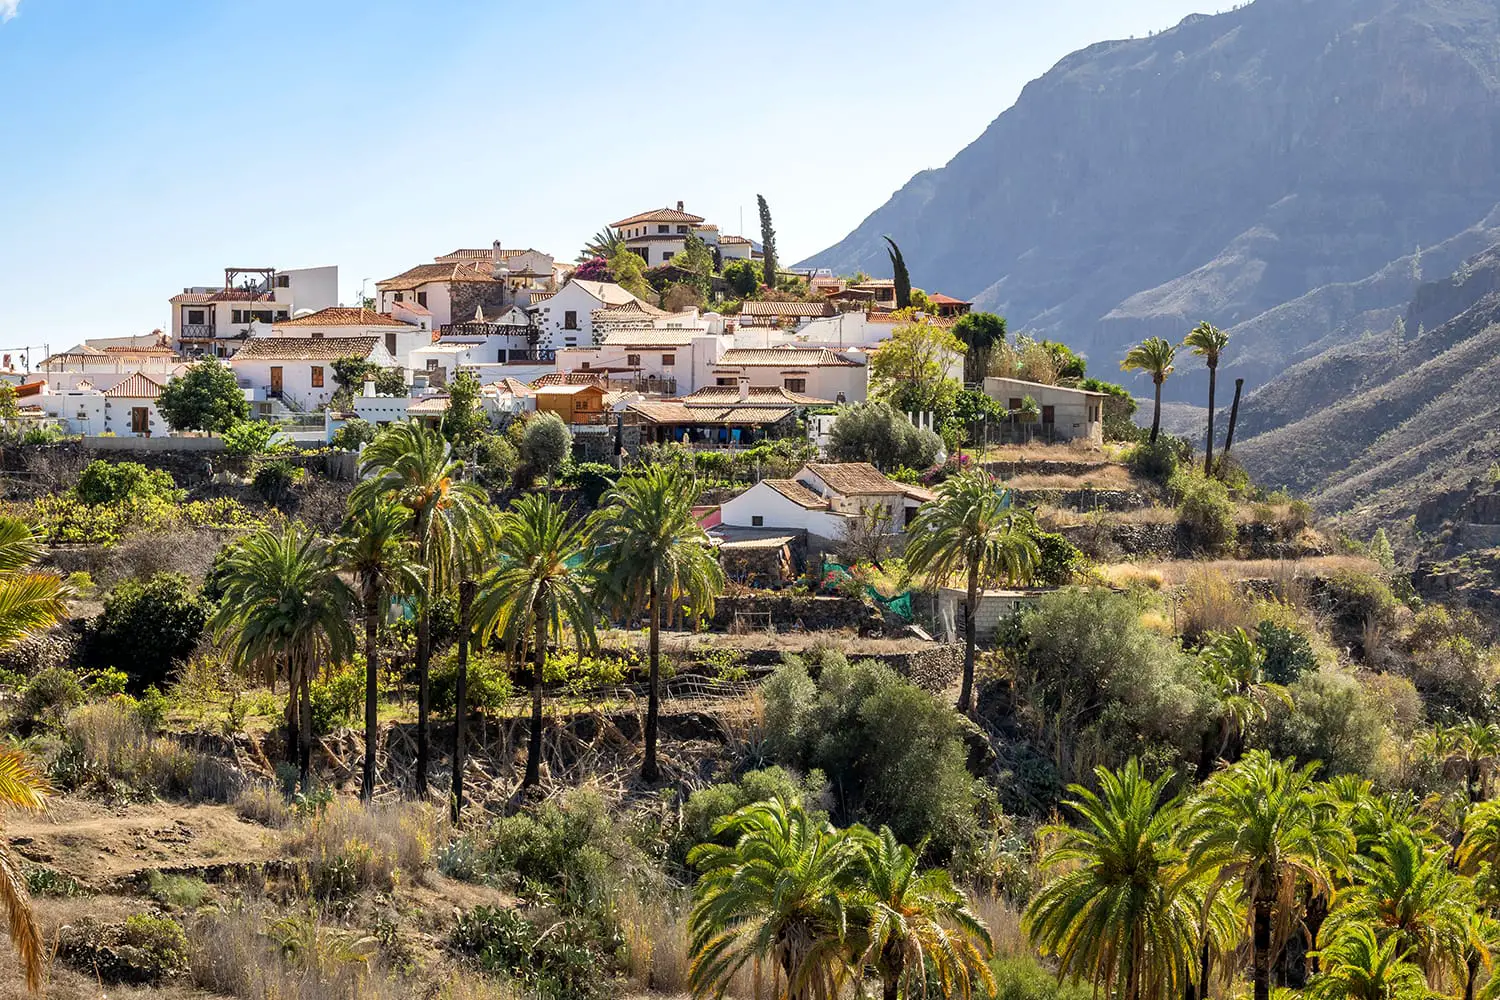 View on Fataga village located in the Barranco de Fataga Valley, impressive mountain landscape, Canary Islands, Spain